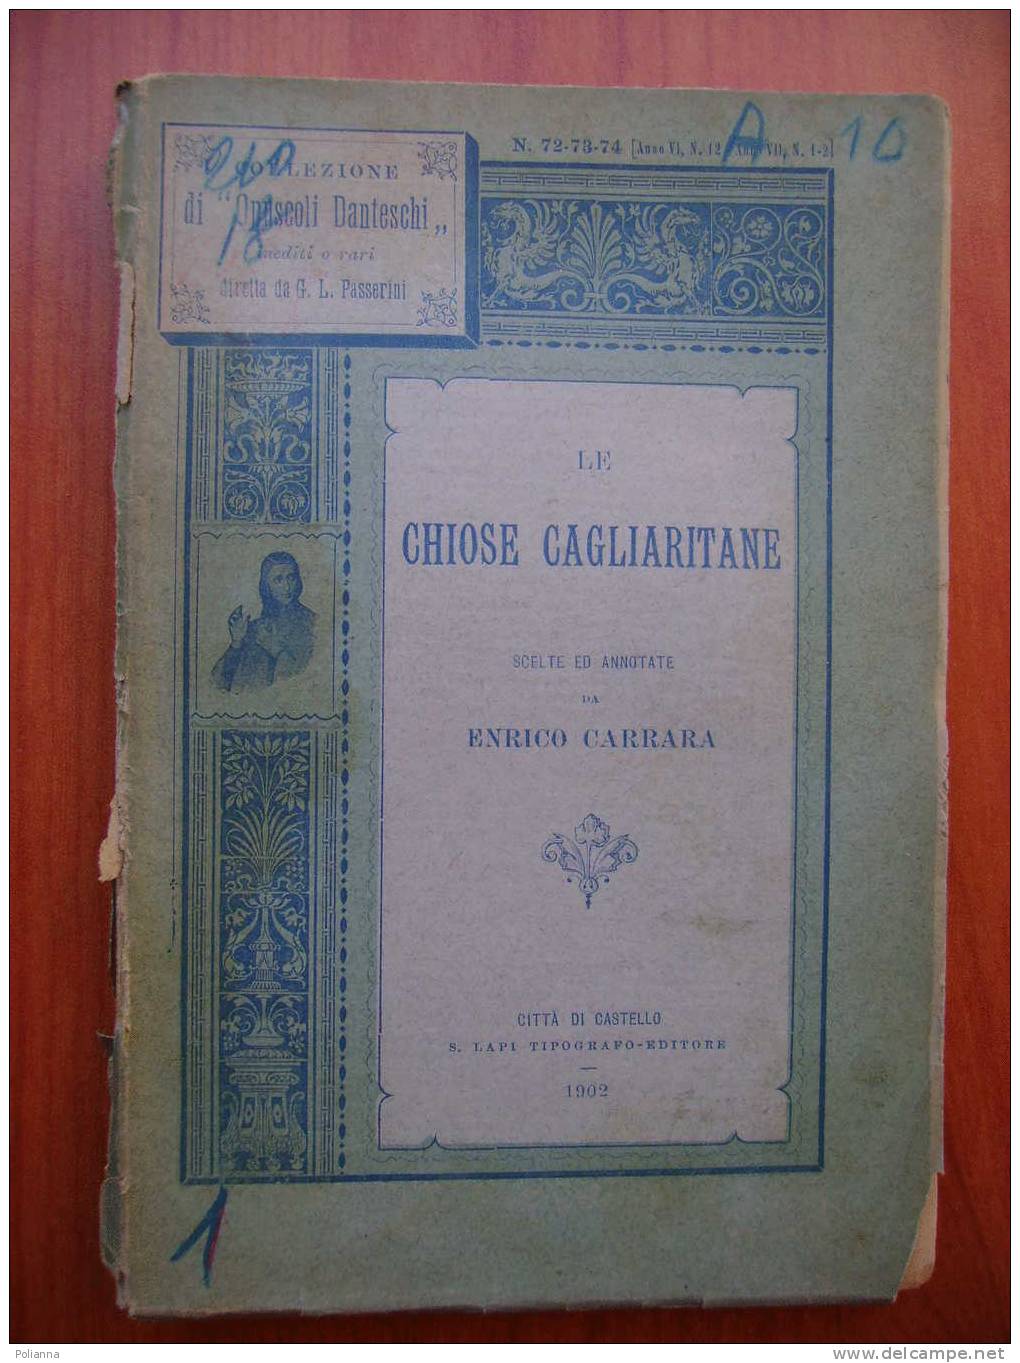 PX/37 Opuscoli Danteschi-LE CHIOSE CAGLIARITANE Carrara 1902 - Old